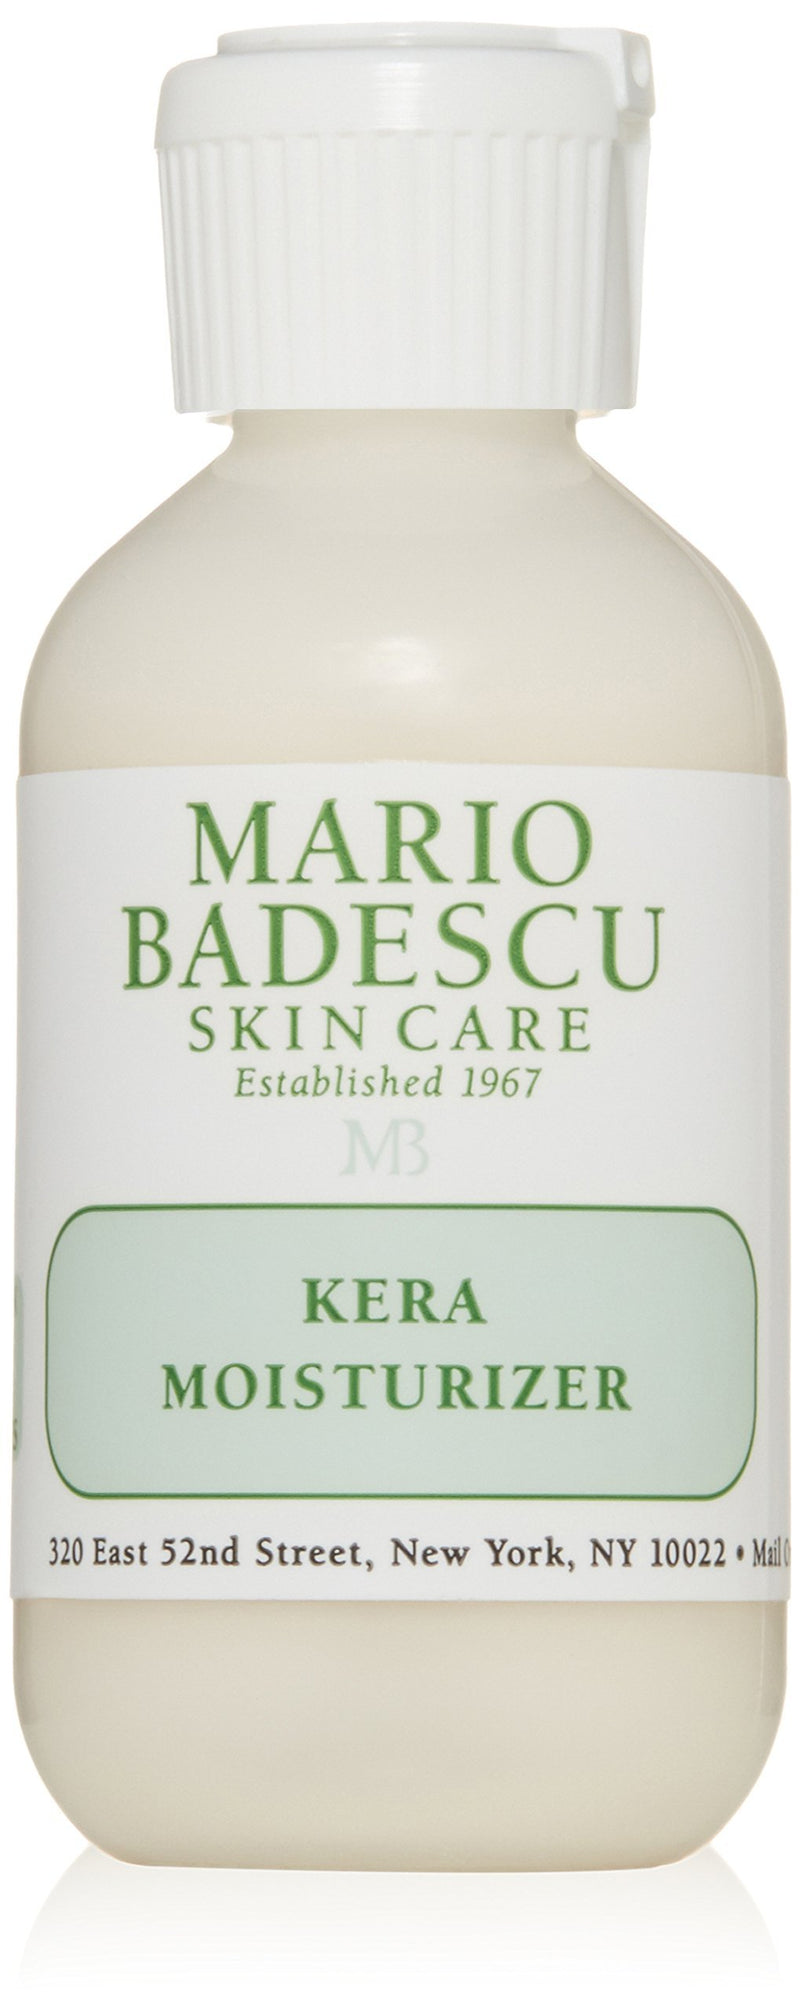 Kera Moisturizer - For Dry/ Sensitive Skin Types 2oz